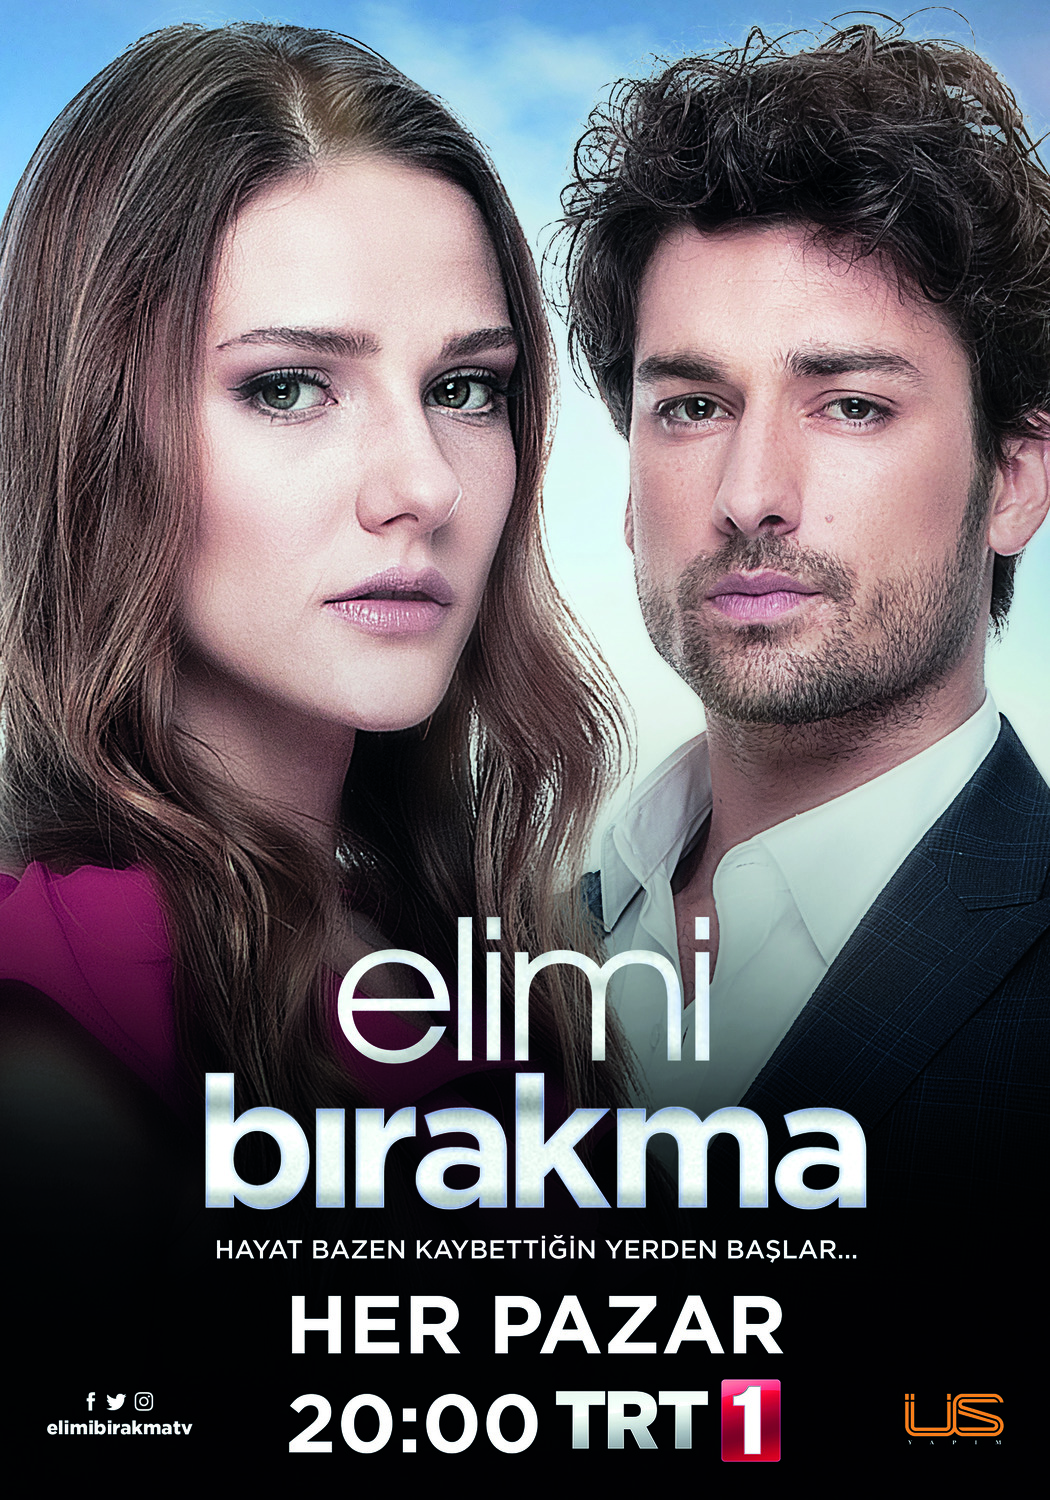 Extra Large Movie Poster Image for Elimi birakma (#1 of 20)